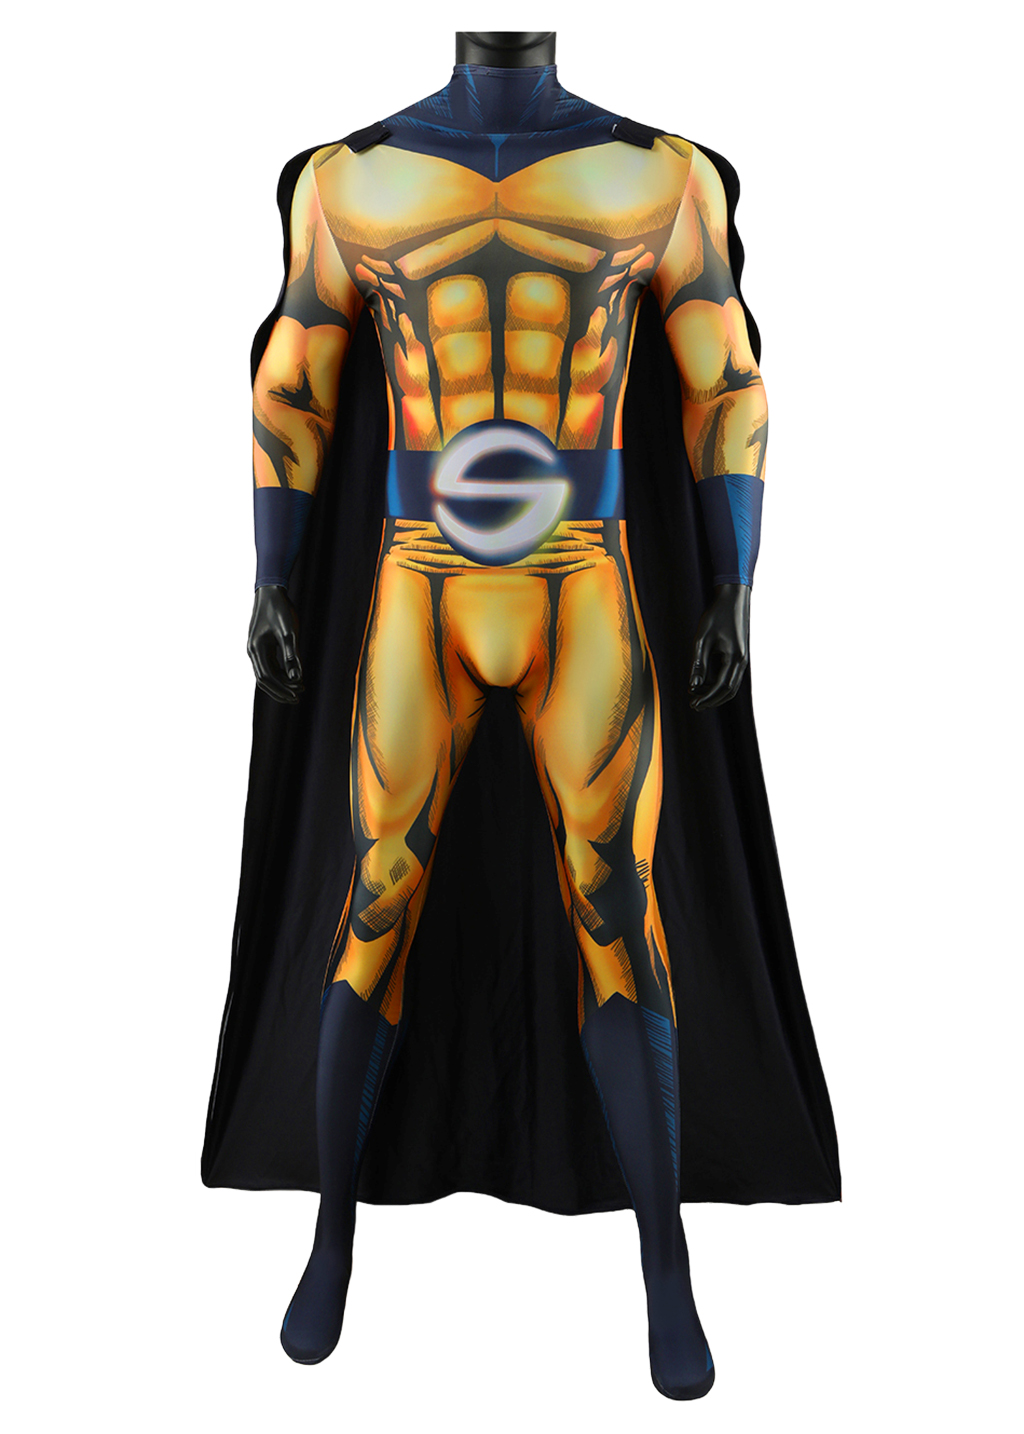 Sentry Costume Thunderbolts Bodysuit Cosplay for Adult Kids